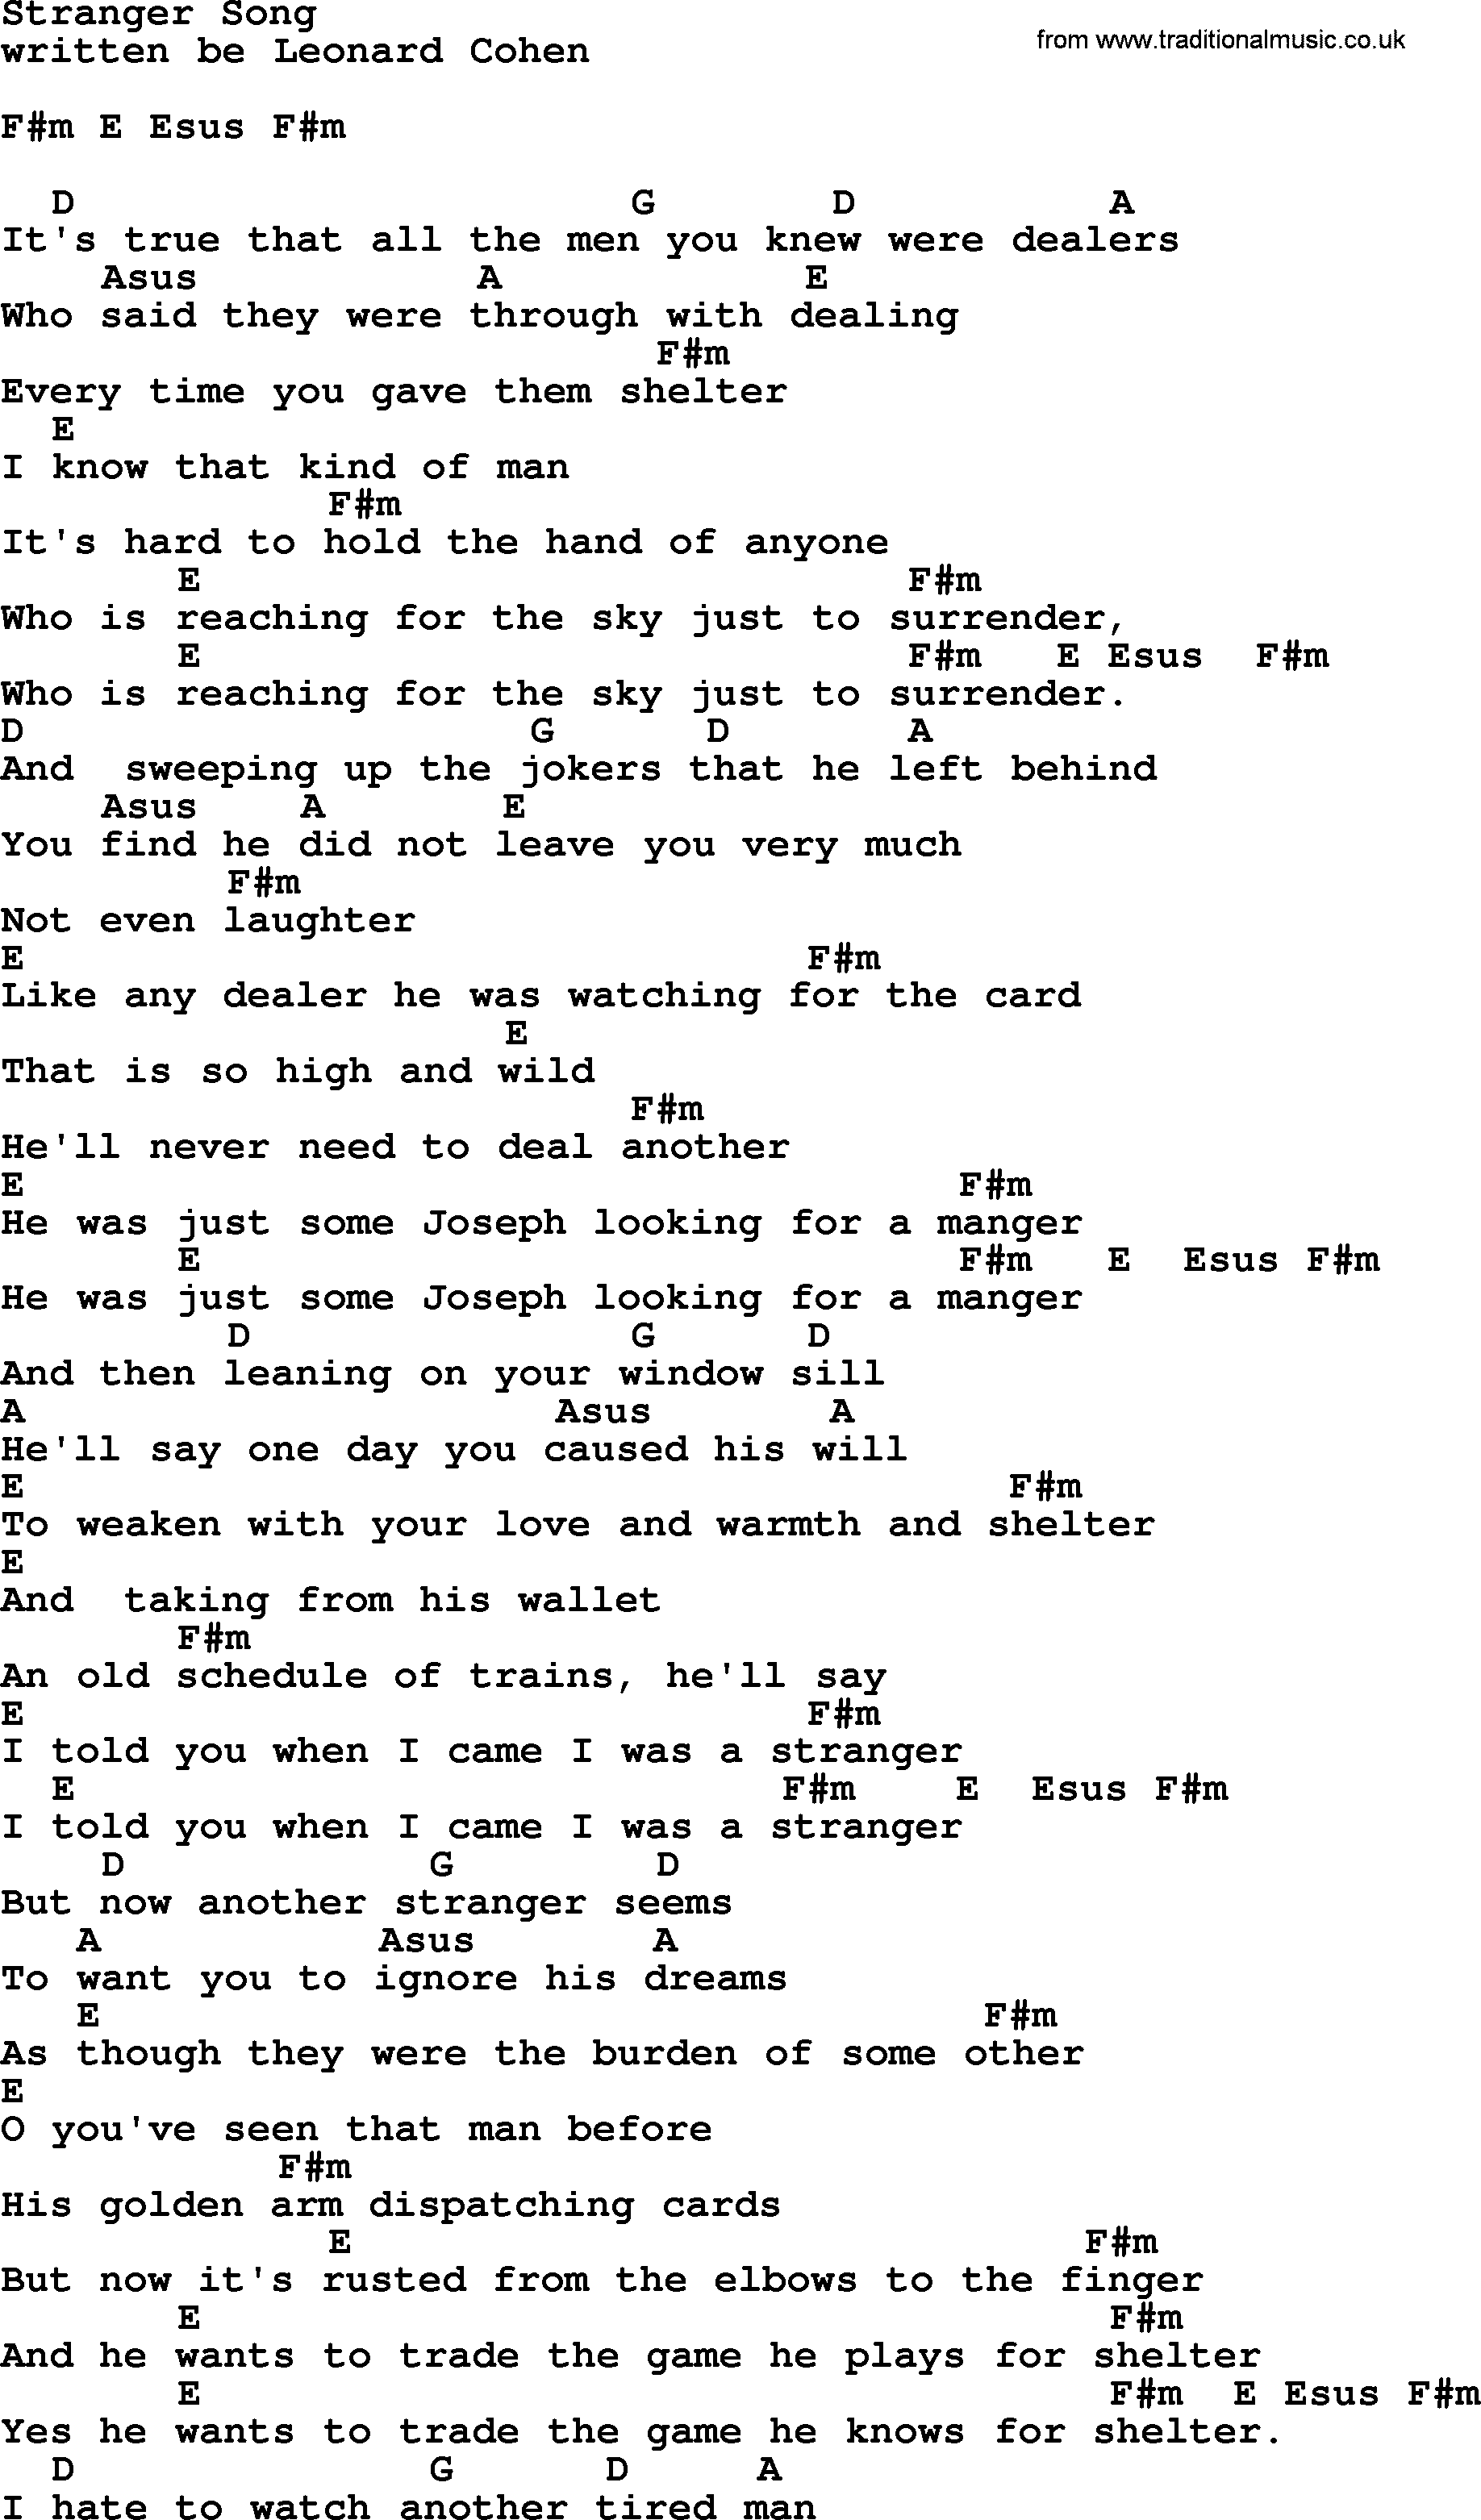 Emmylou Harris song: Stranger Song lyrics and chords